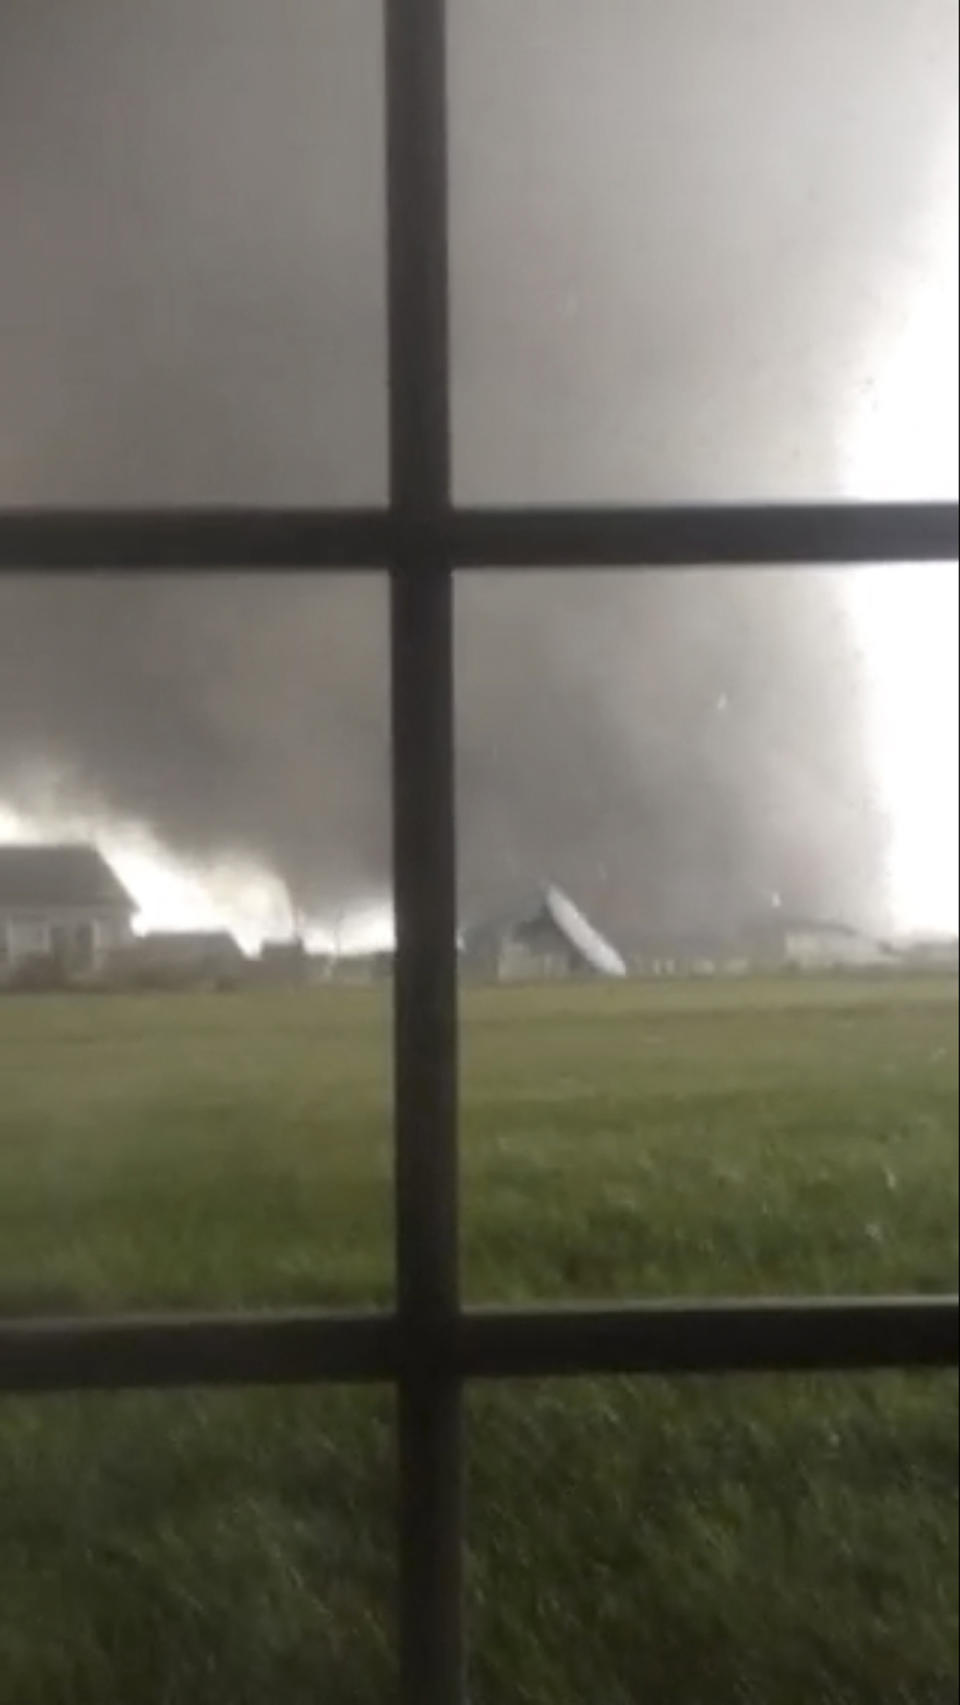 Video still shows an active tornado touching down in Washington